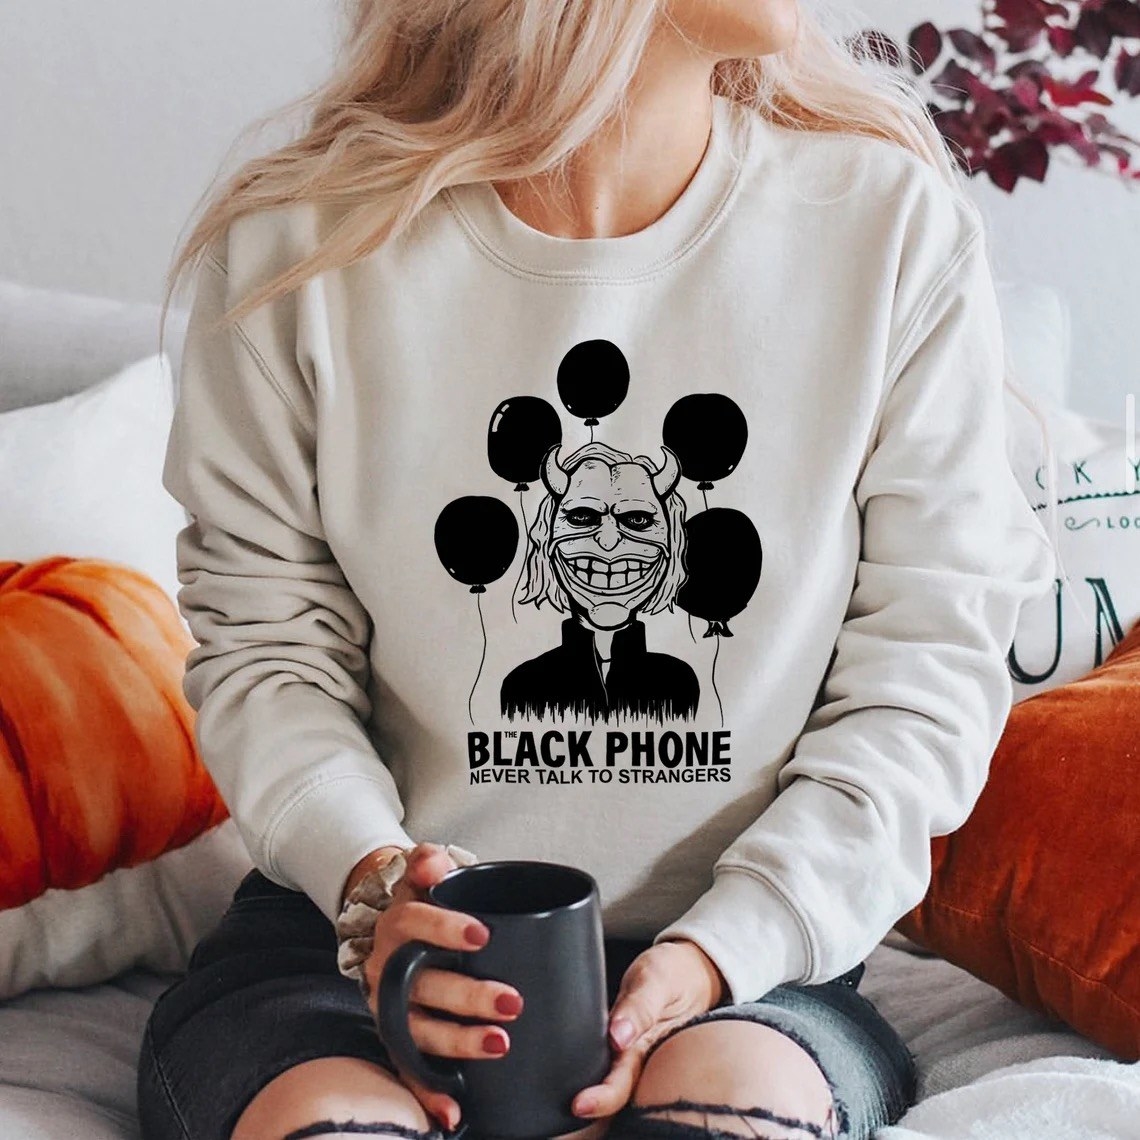 A woman wearing a &quot;Black Phone&quot; T-shirt